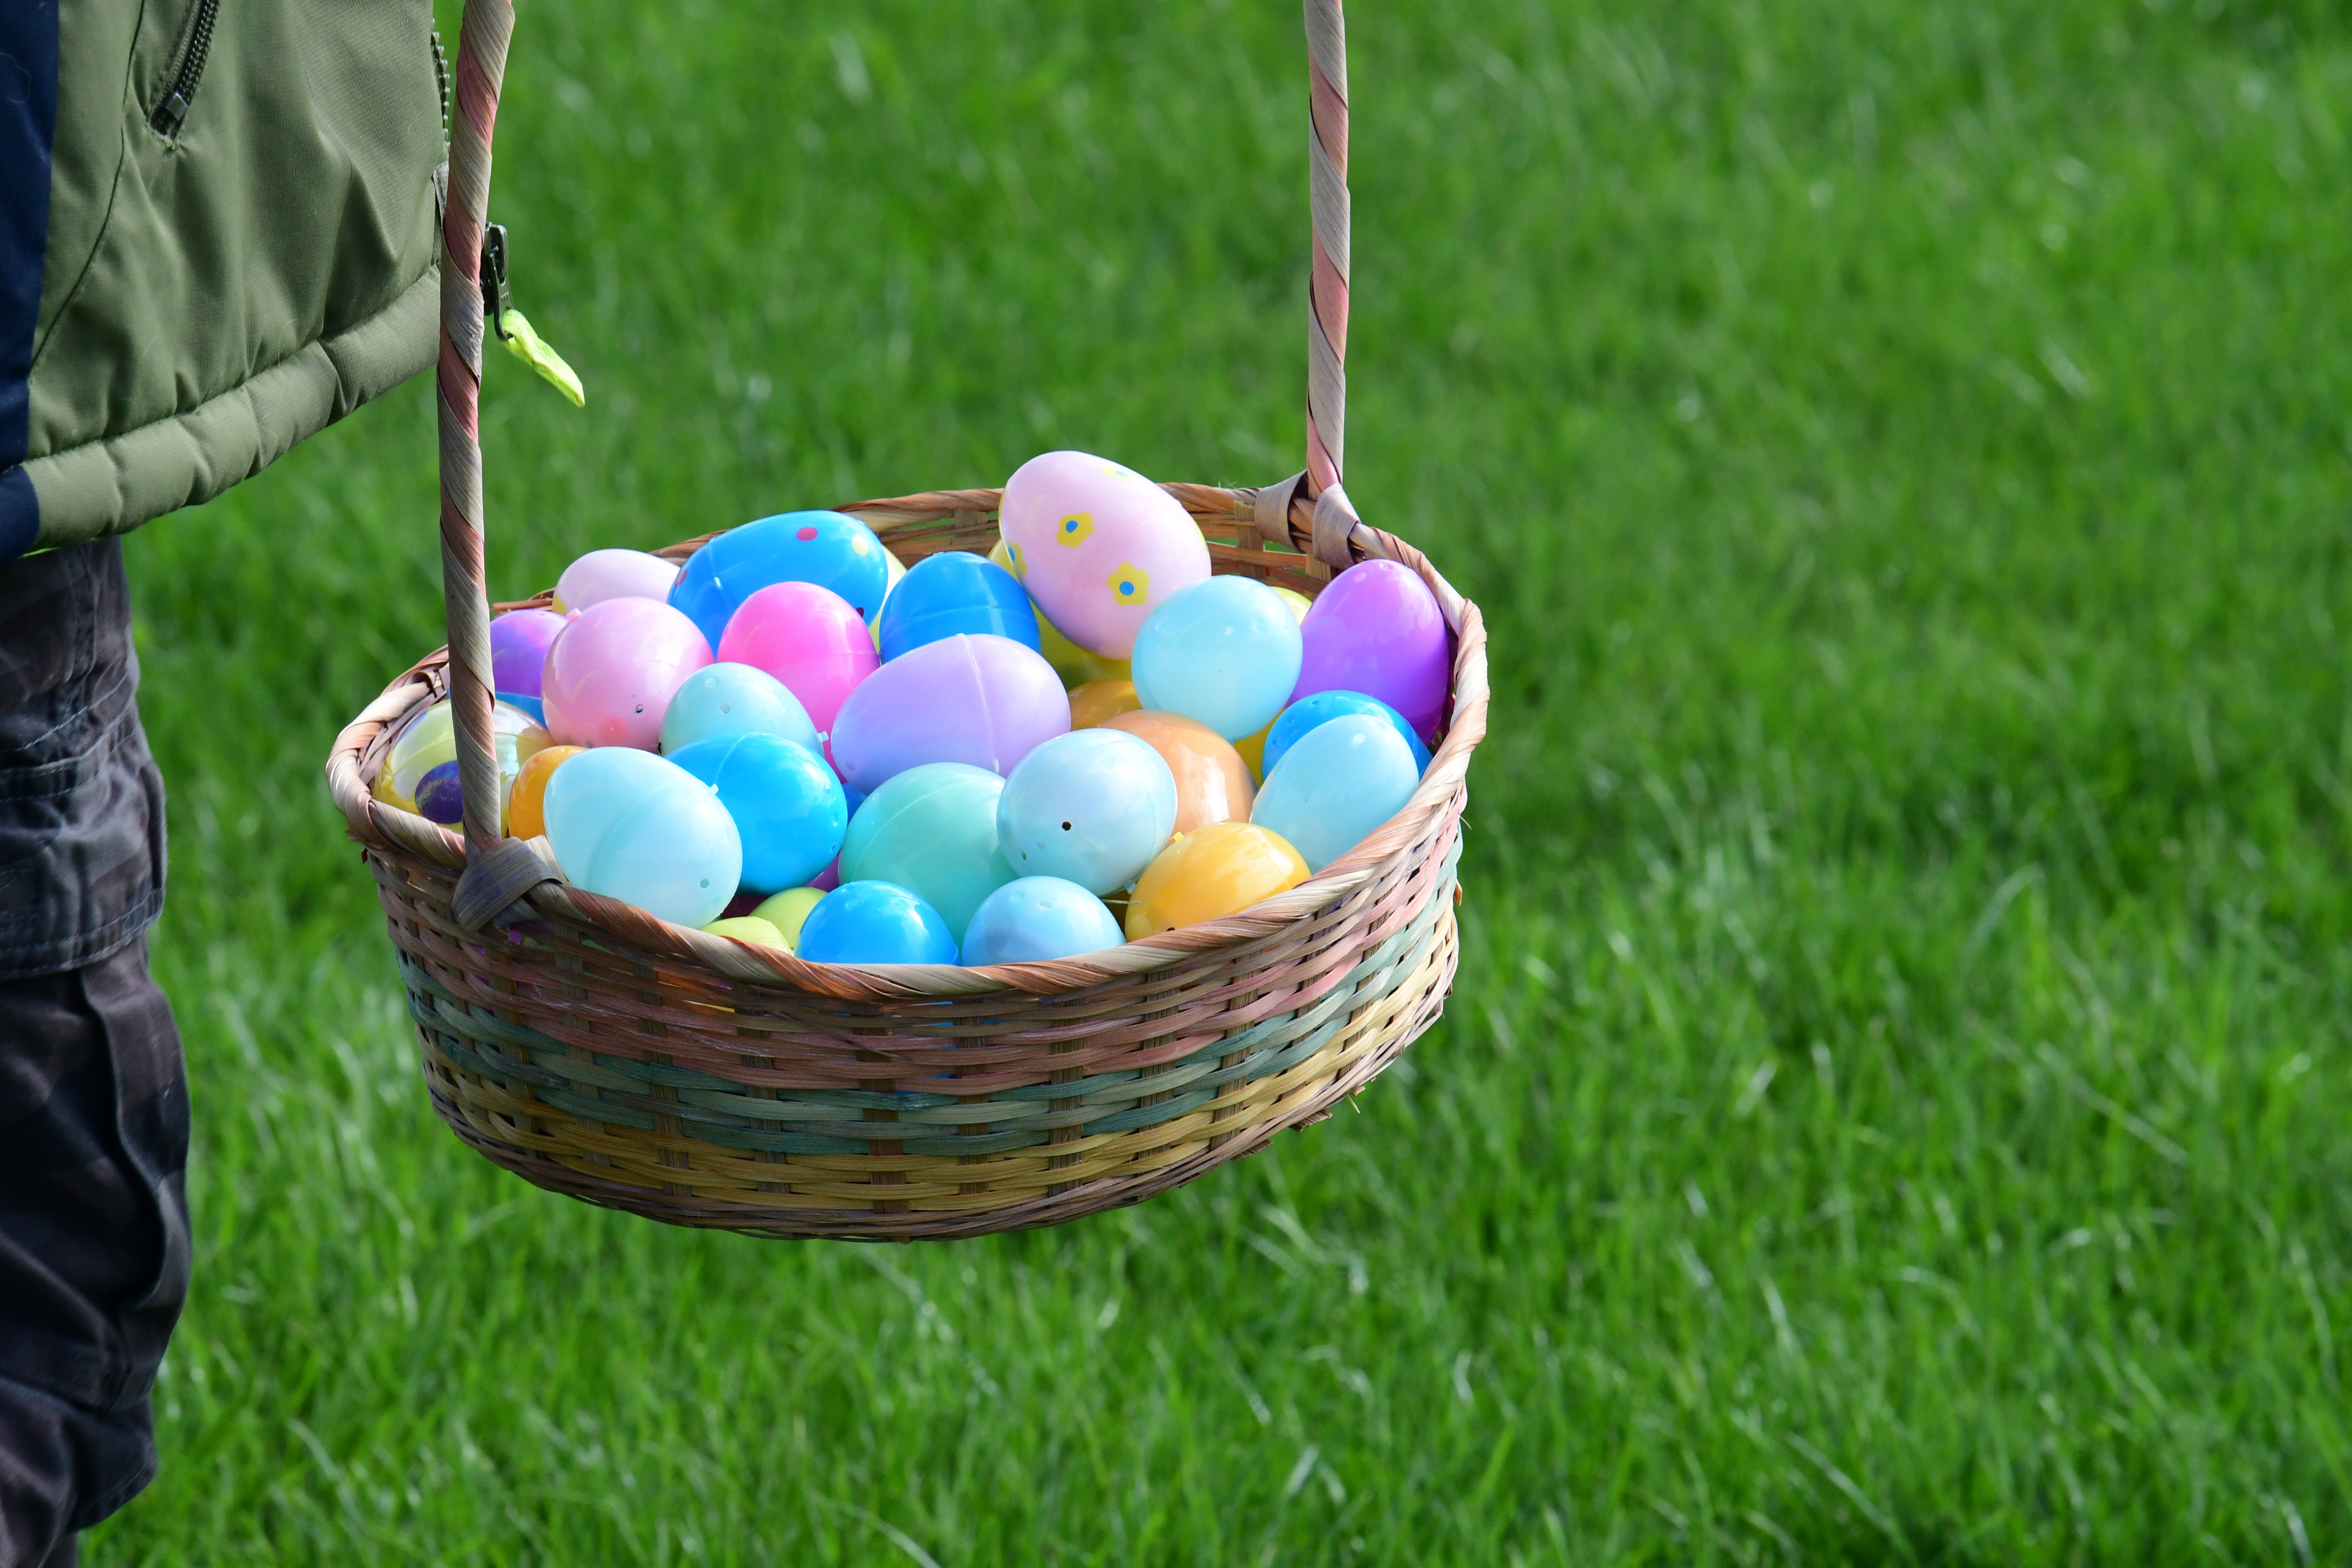 Ohio Easter egg hunt devolves into chaos as unruly parents shove children - cleveland.com